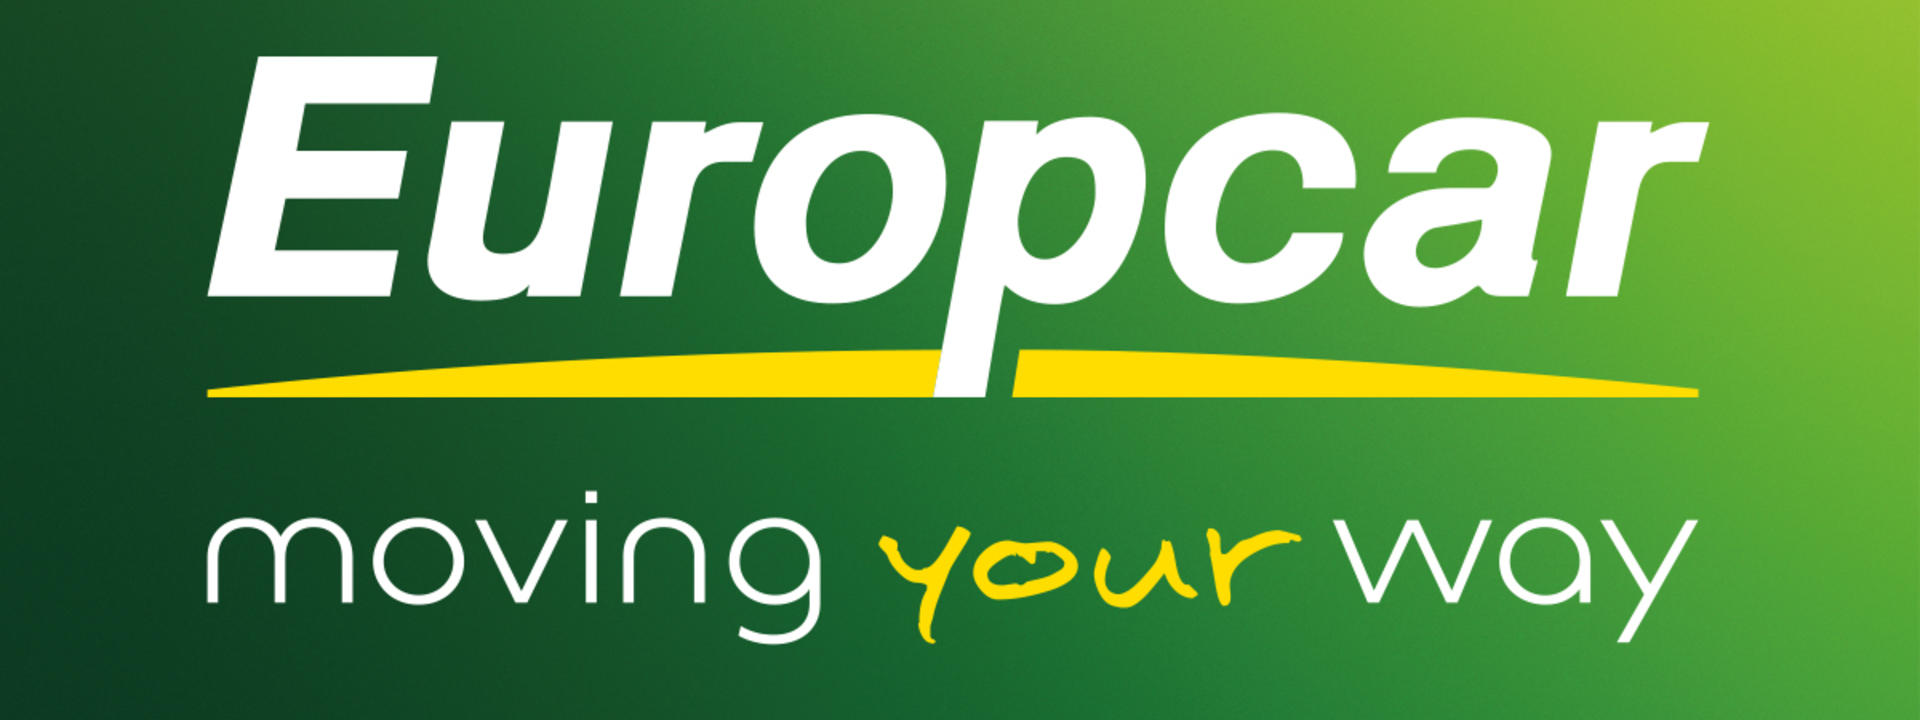 europcar_logo_1200px_v1_8.jpg